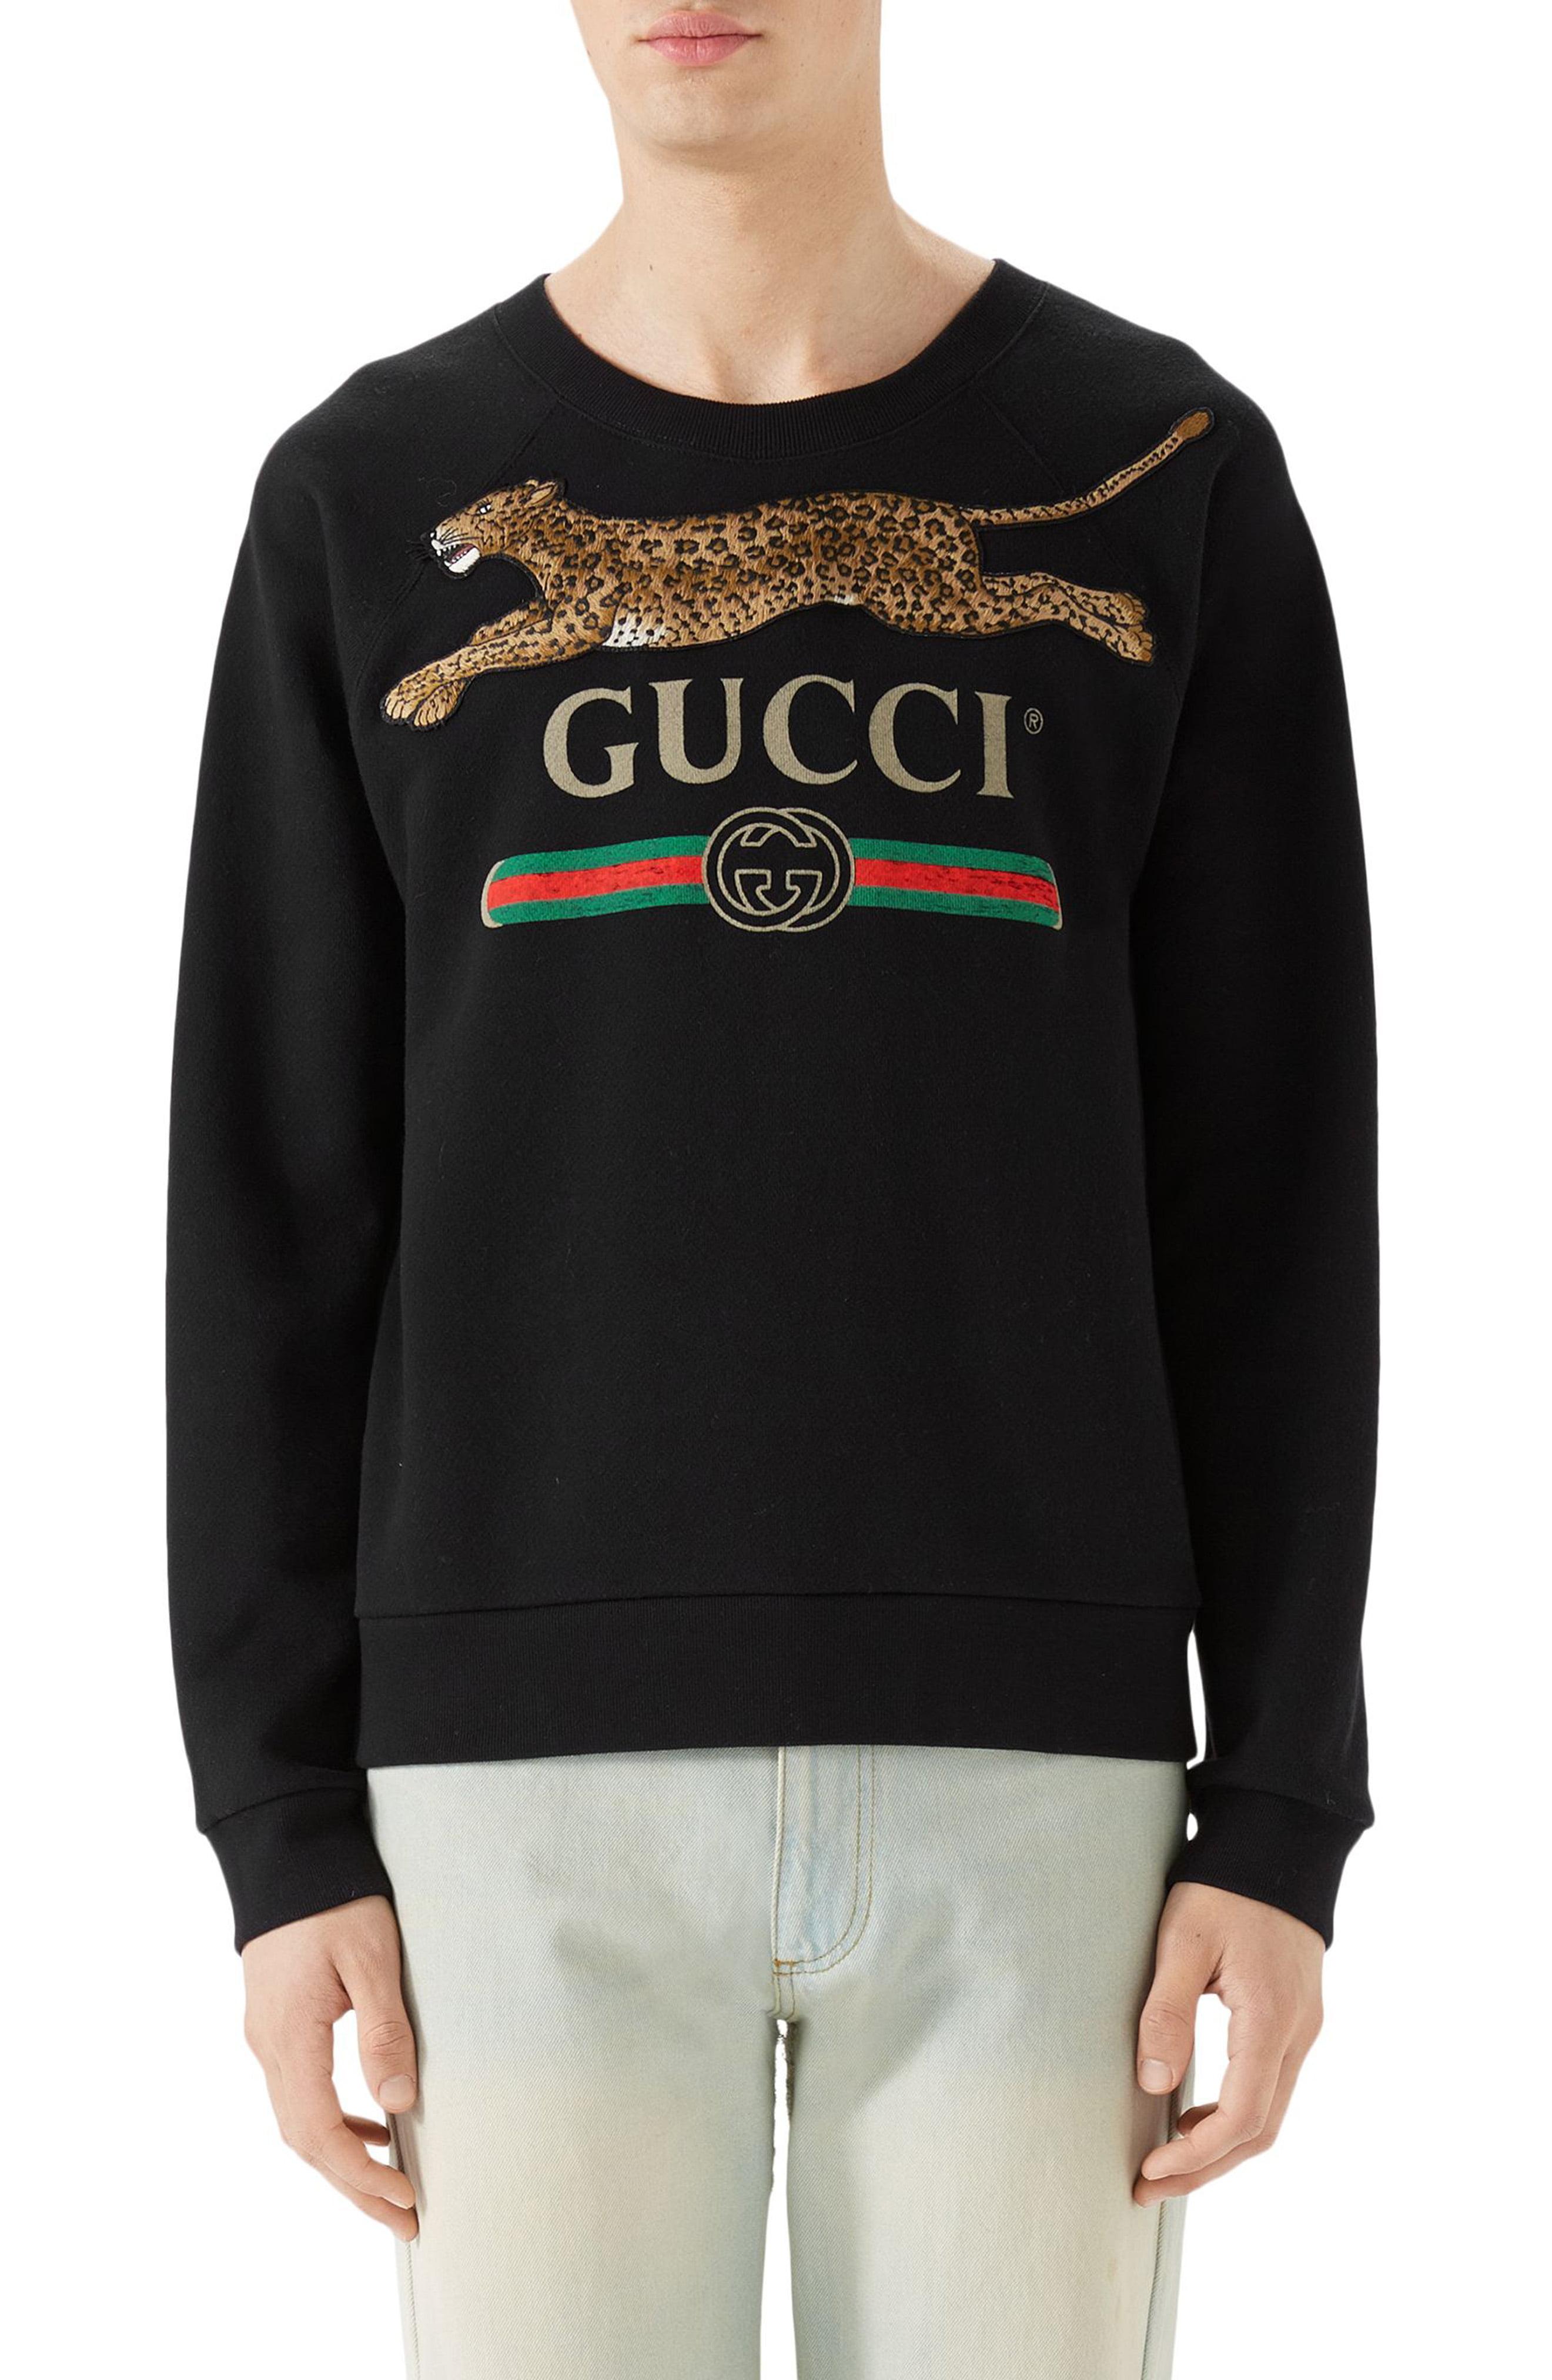 Gucci Sweatshirt Online Sale, UP TO 70% OFF